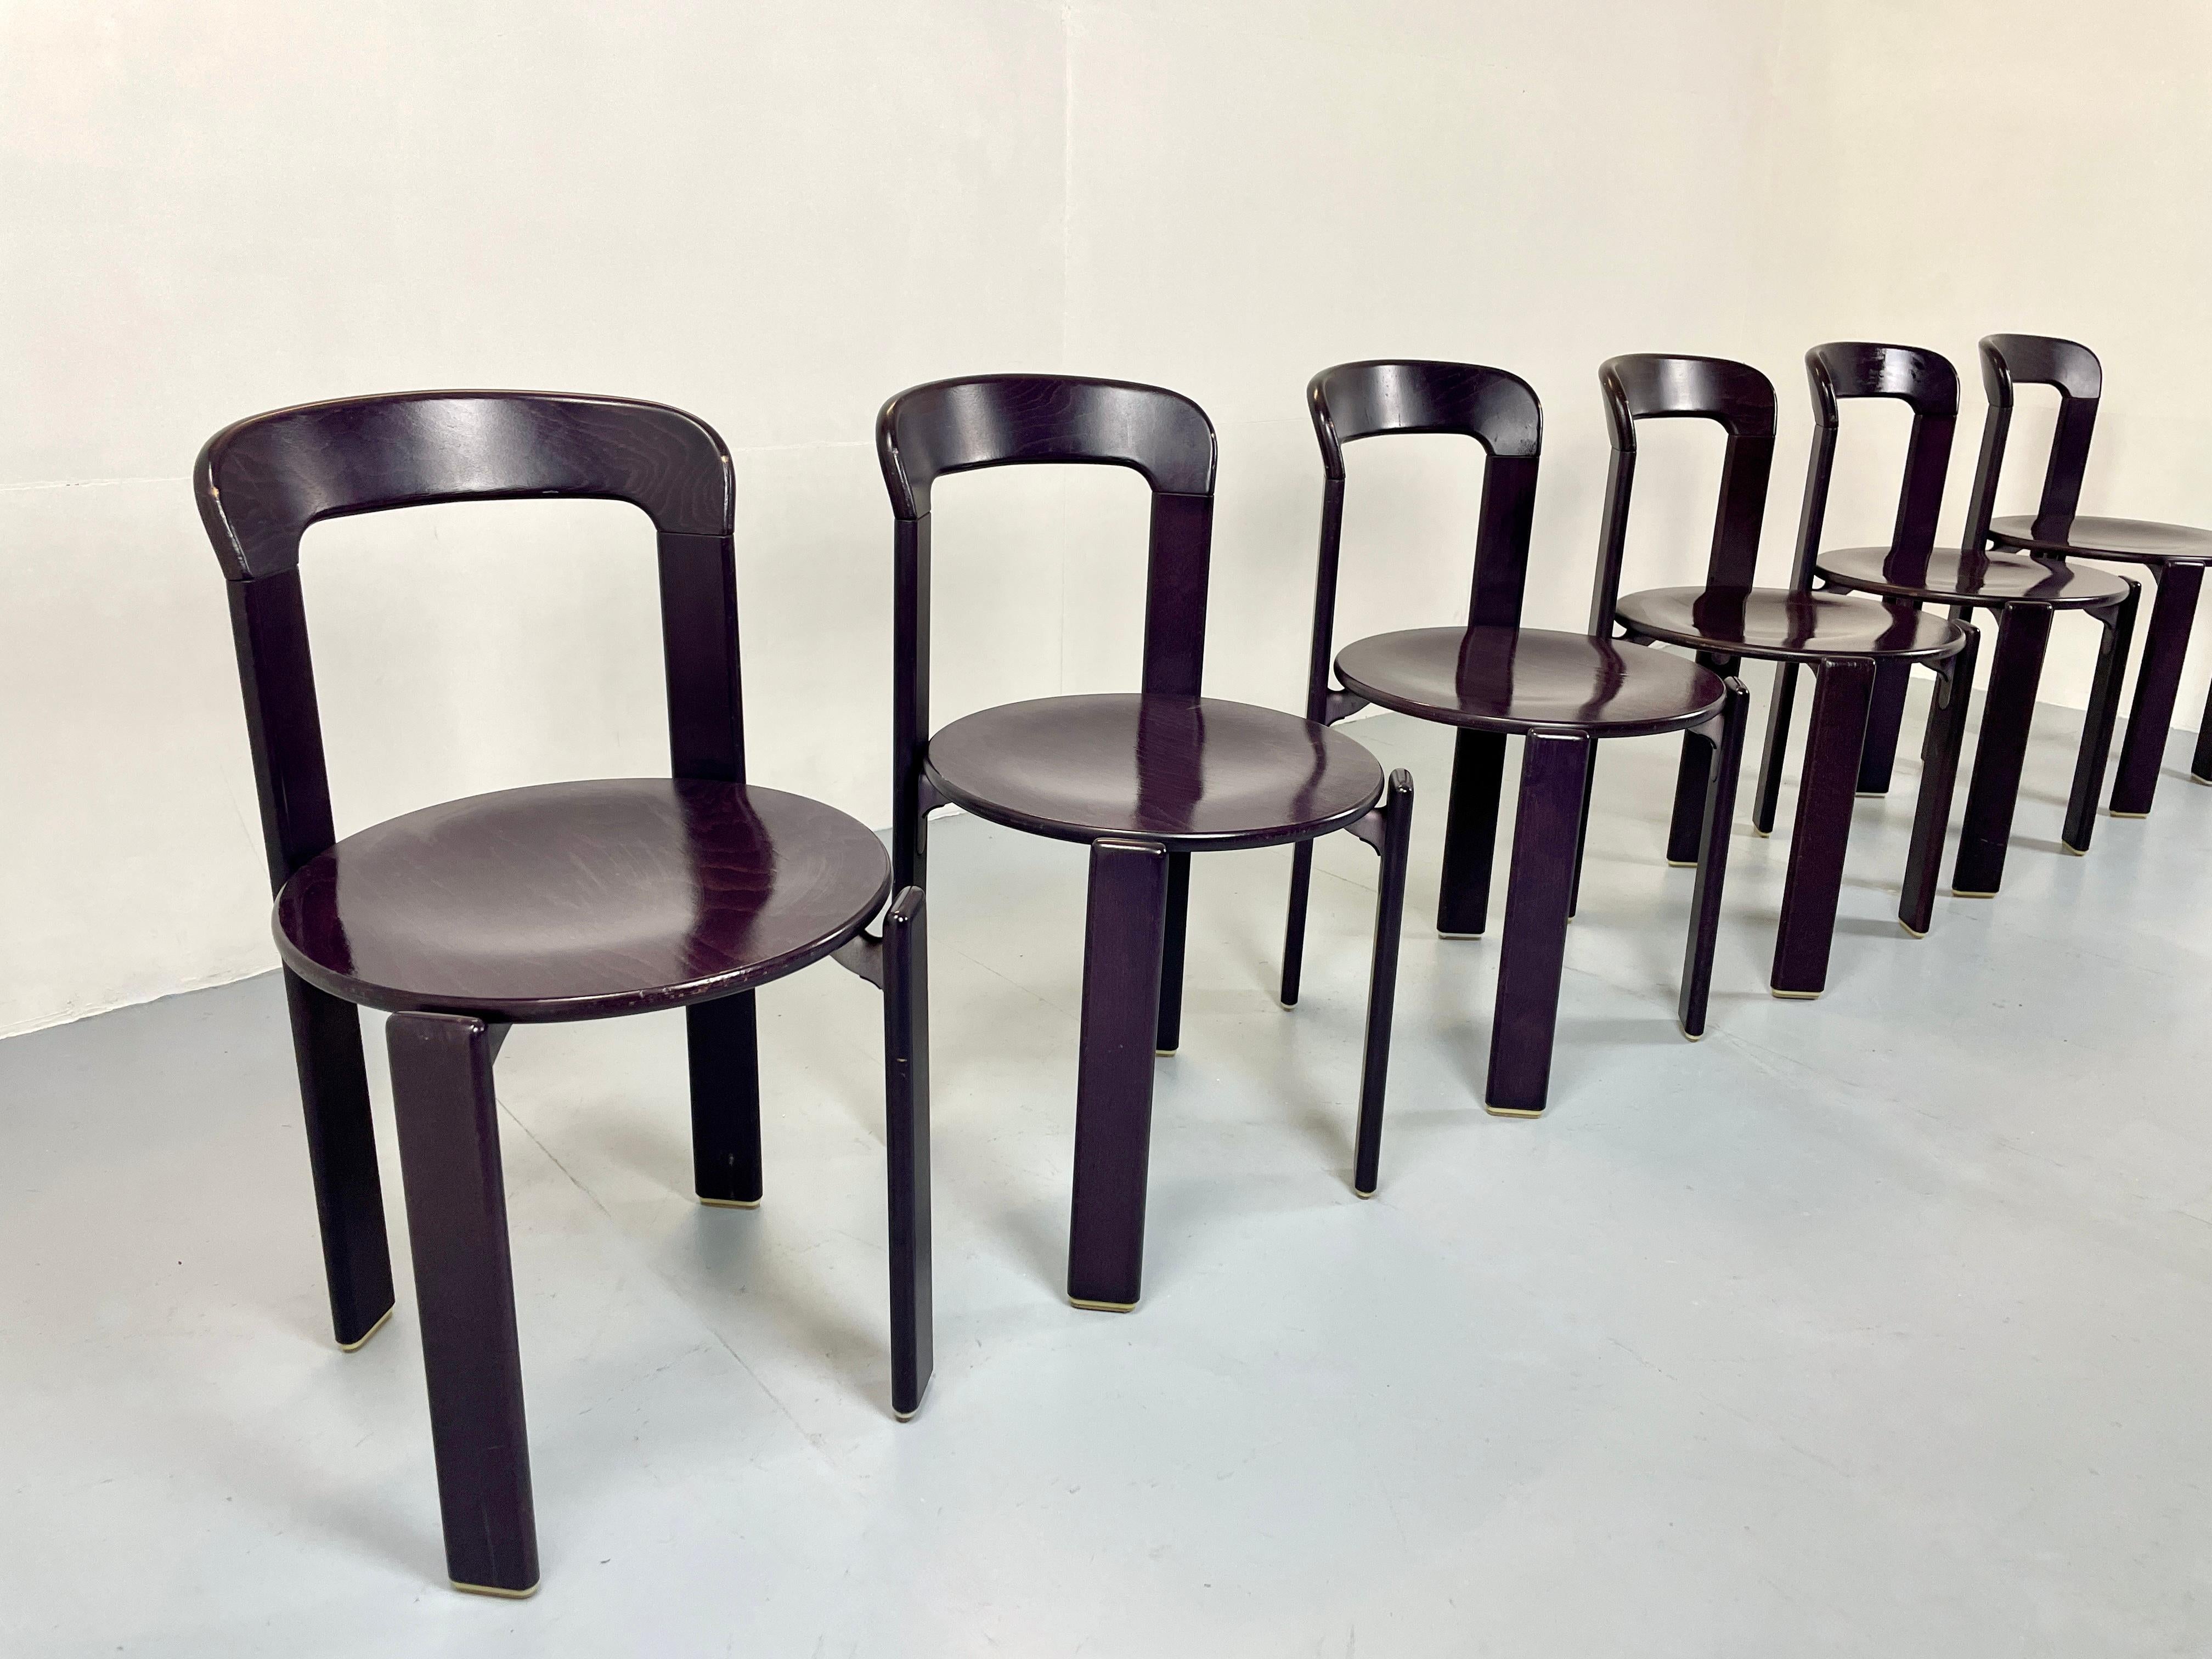 Post-Modern Vintage Bruno Rey Chairs by Kusch Co. in Eggplant / Violett, 1970s